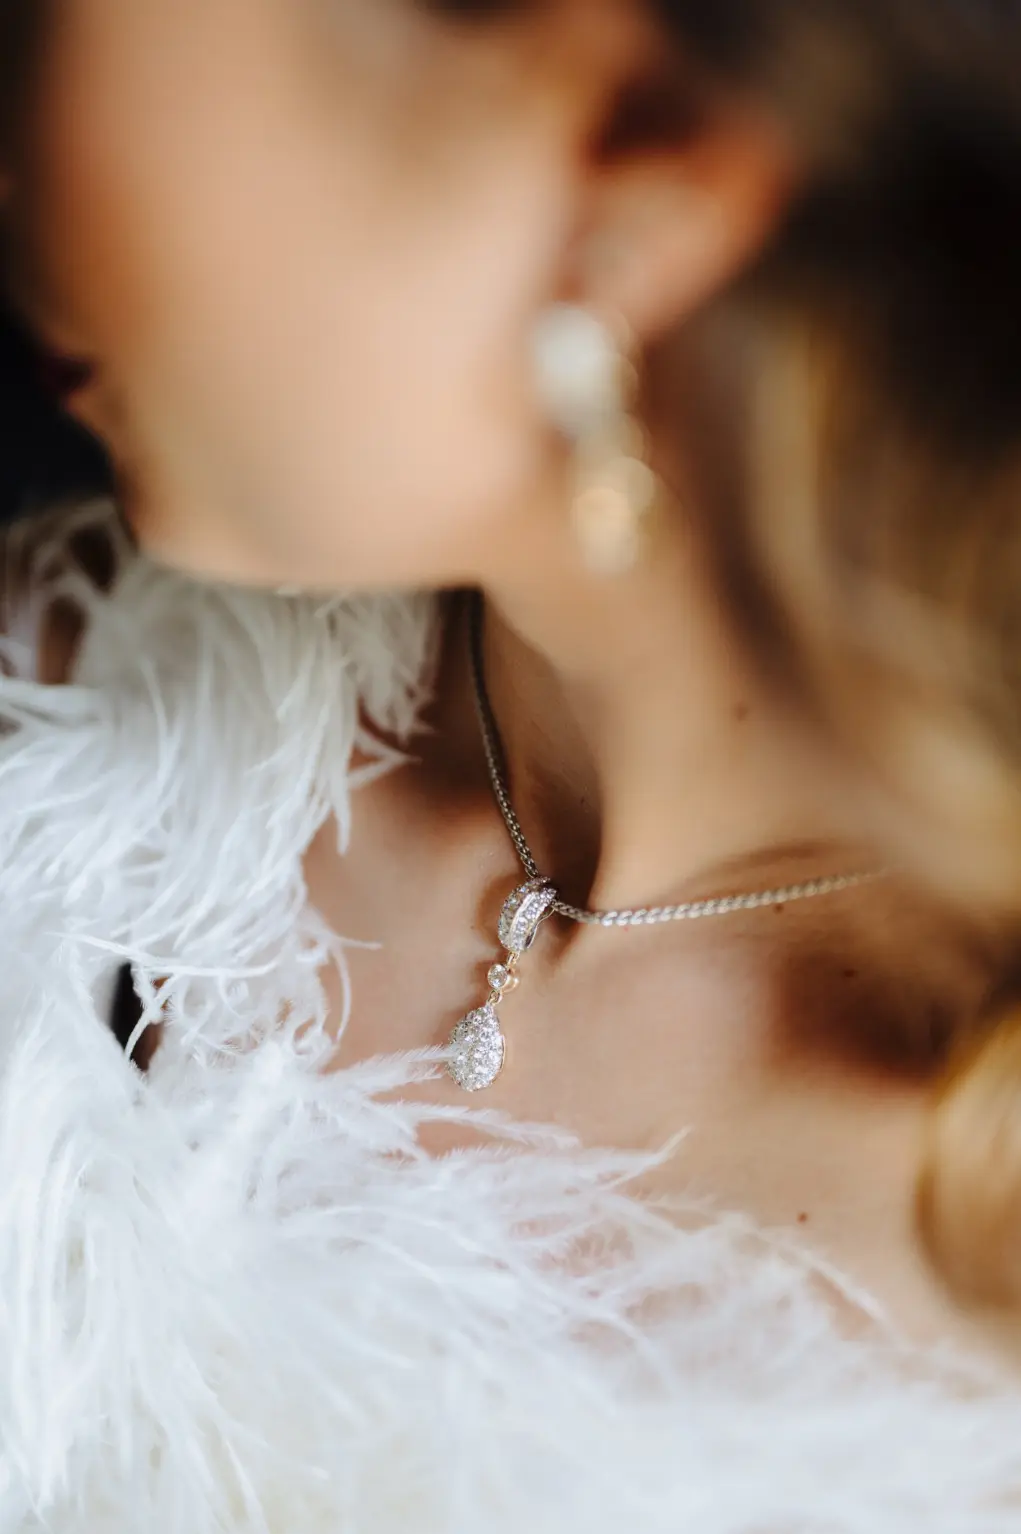 Gold and Silver Bridal Wedding Jewelry Inspiration | Tampa Bay Jeweler Whitehurst Jewelry